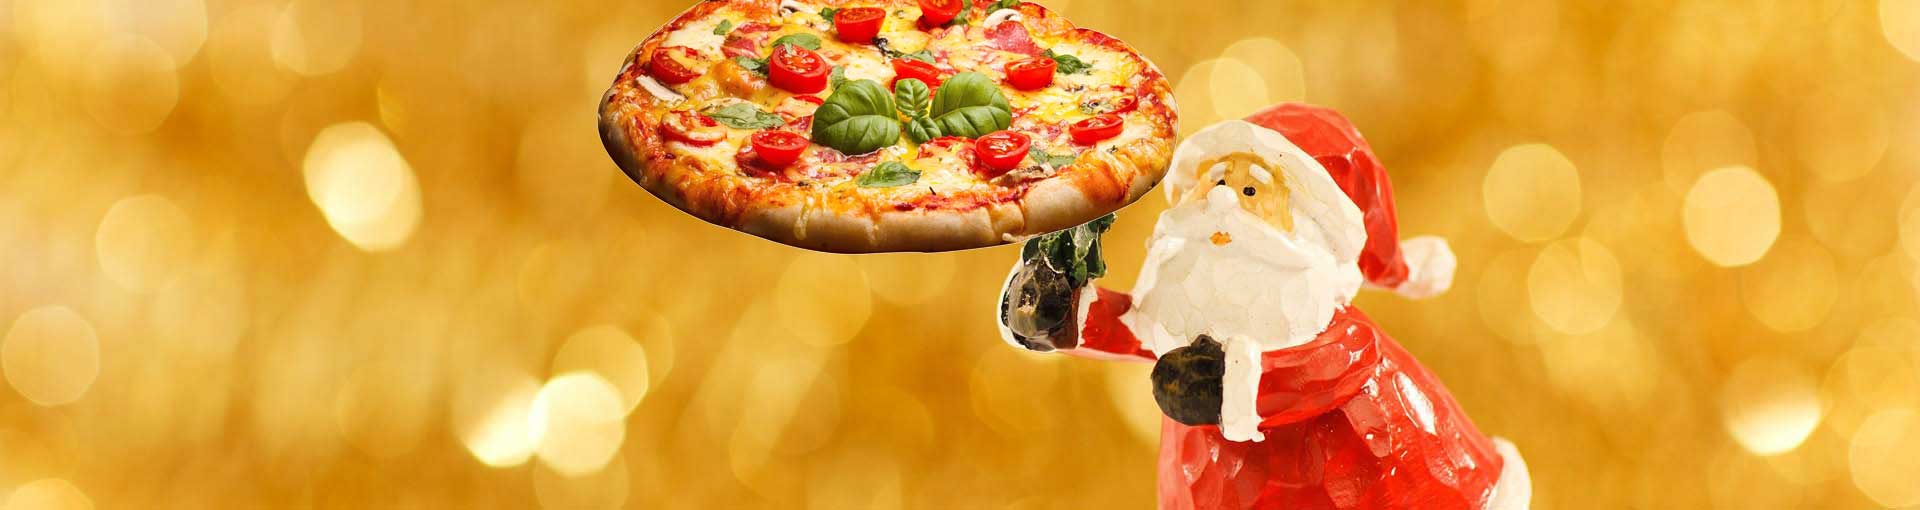 pizza with santa